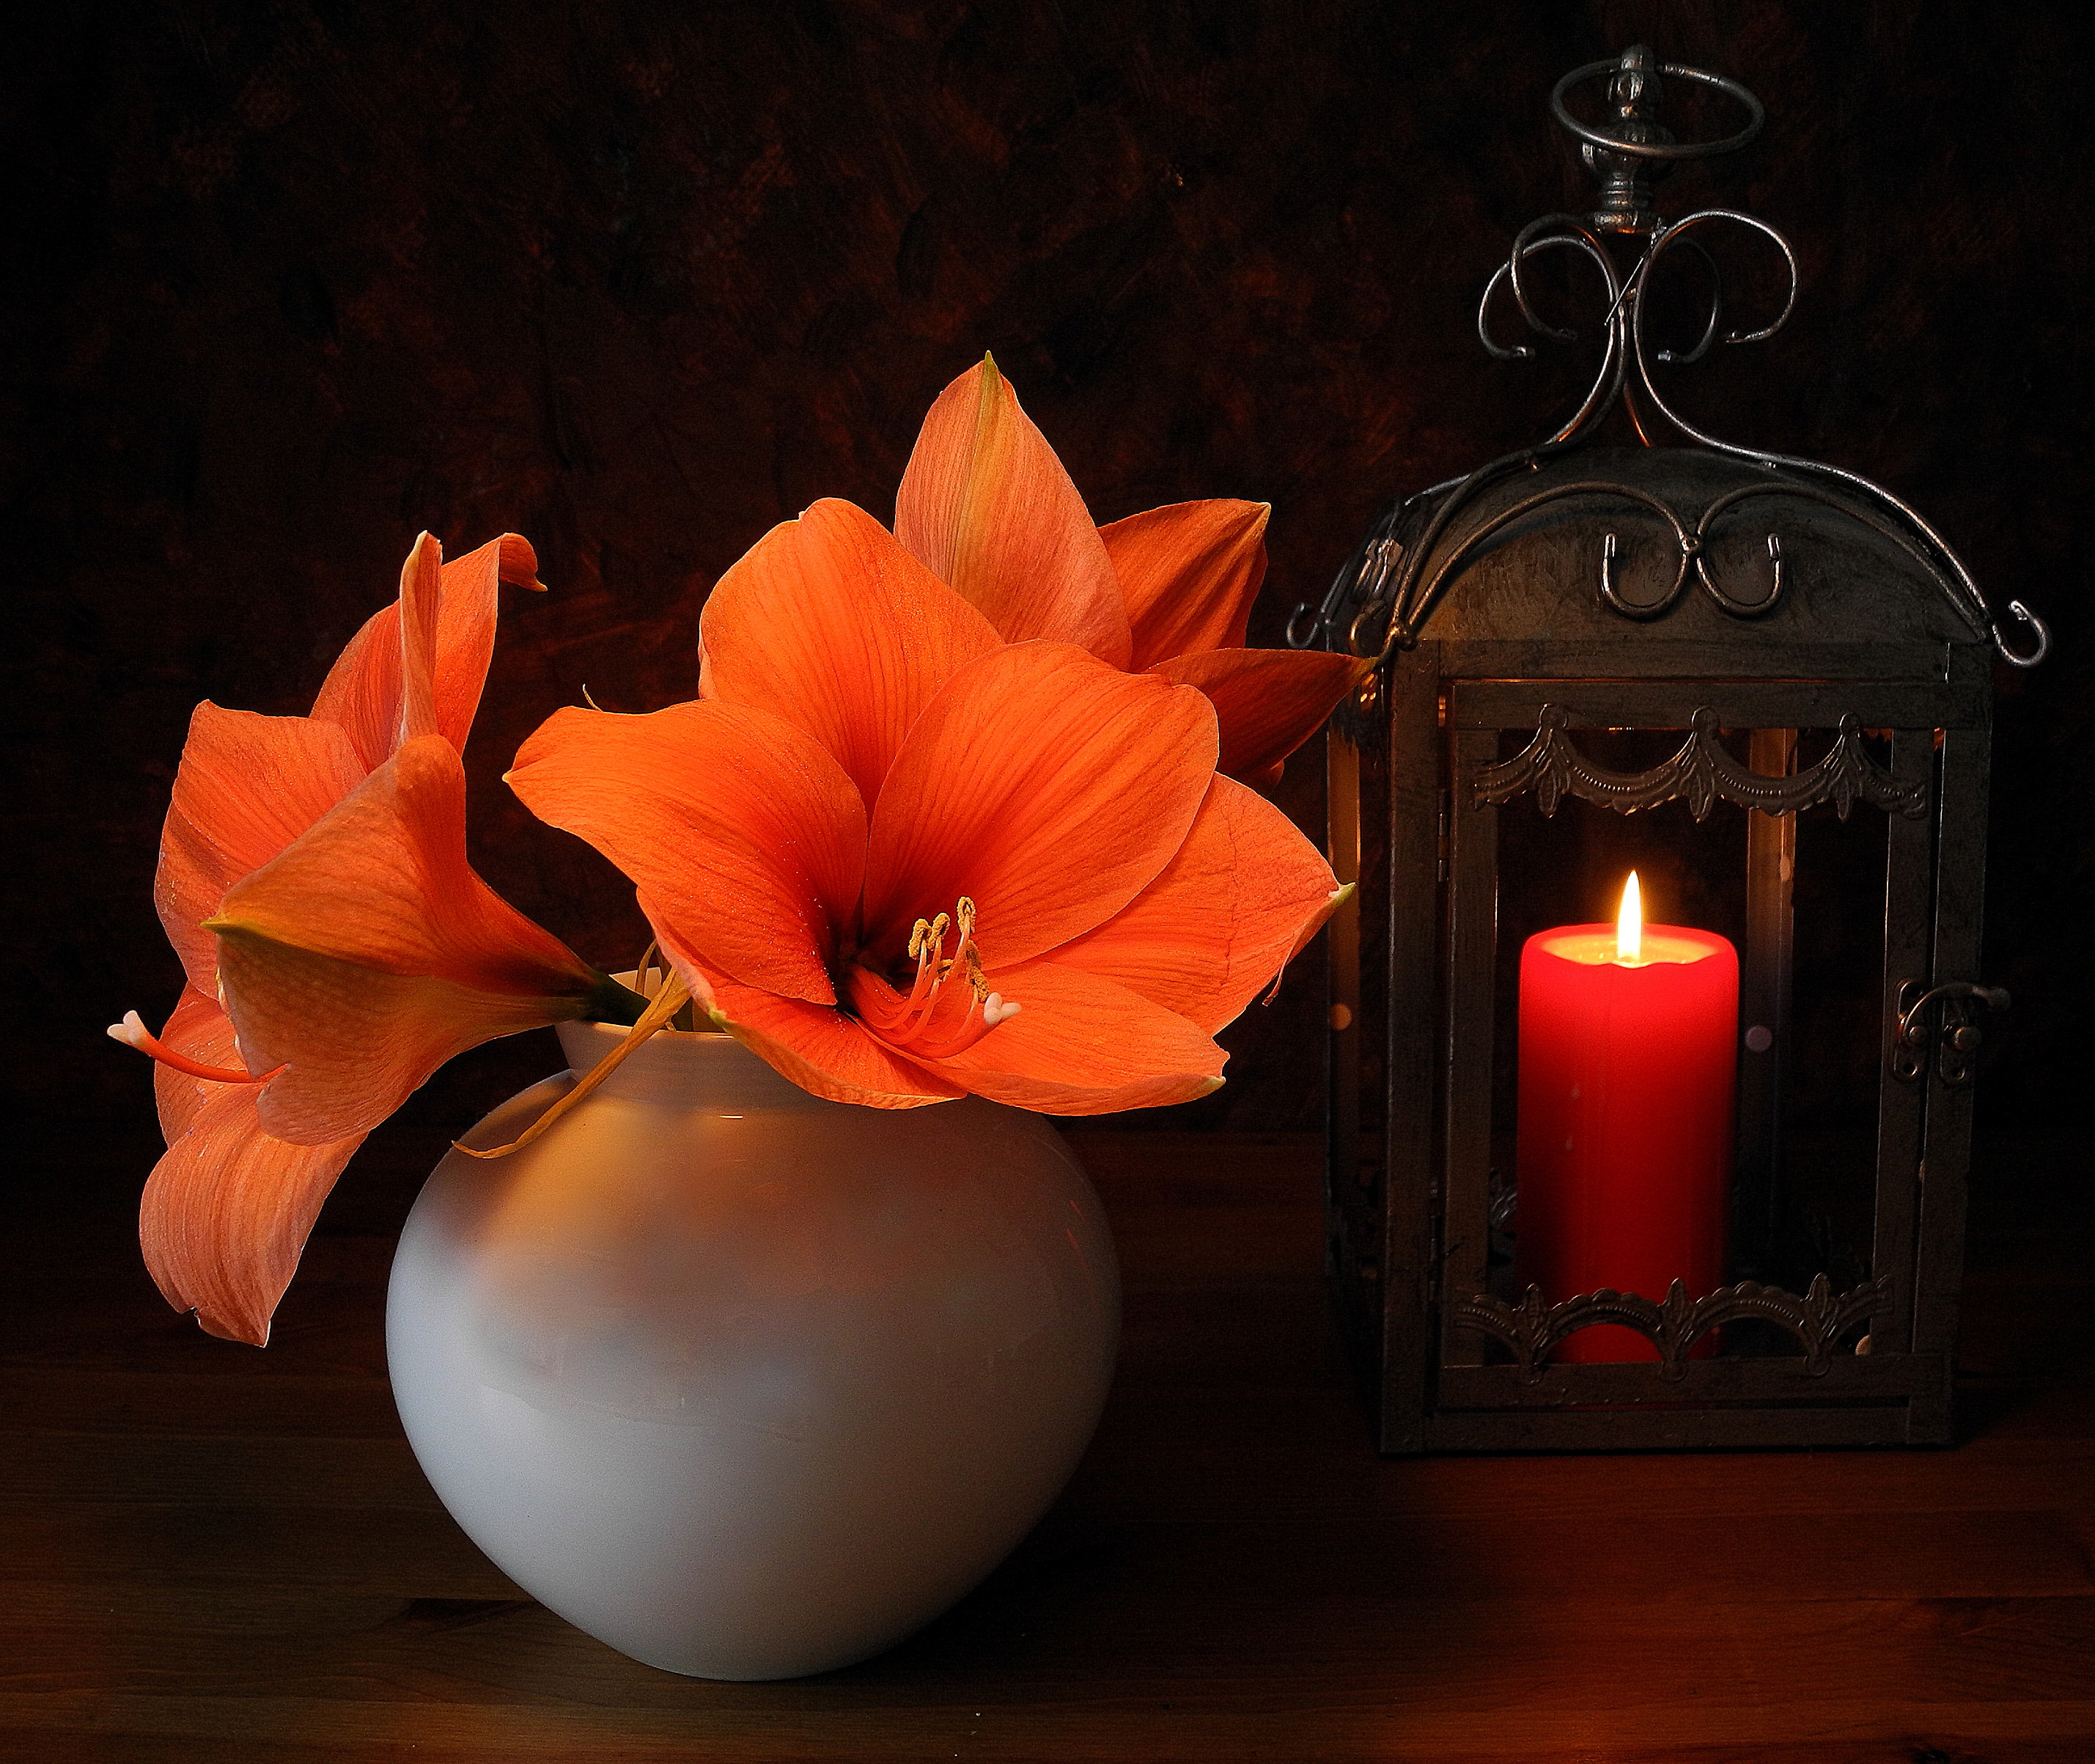 lamp, photography, still life, candle, lantern, lily, orange flower, vase